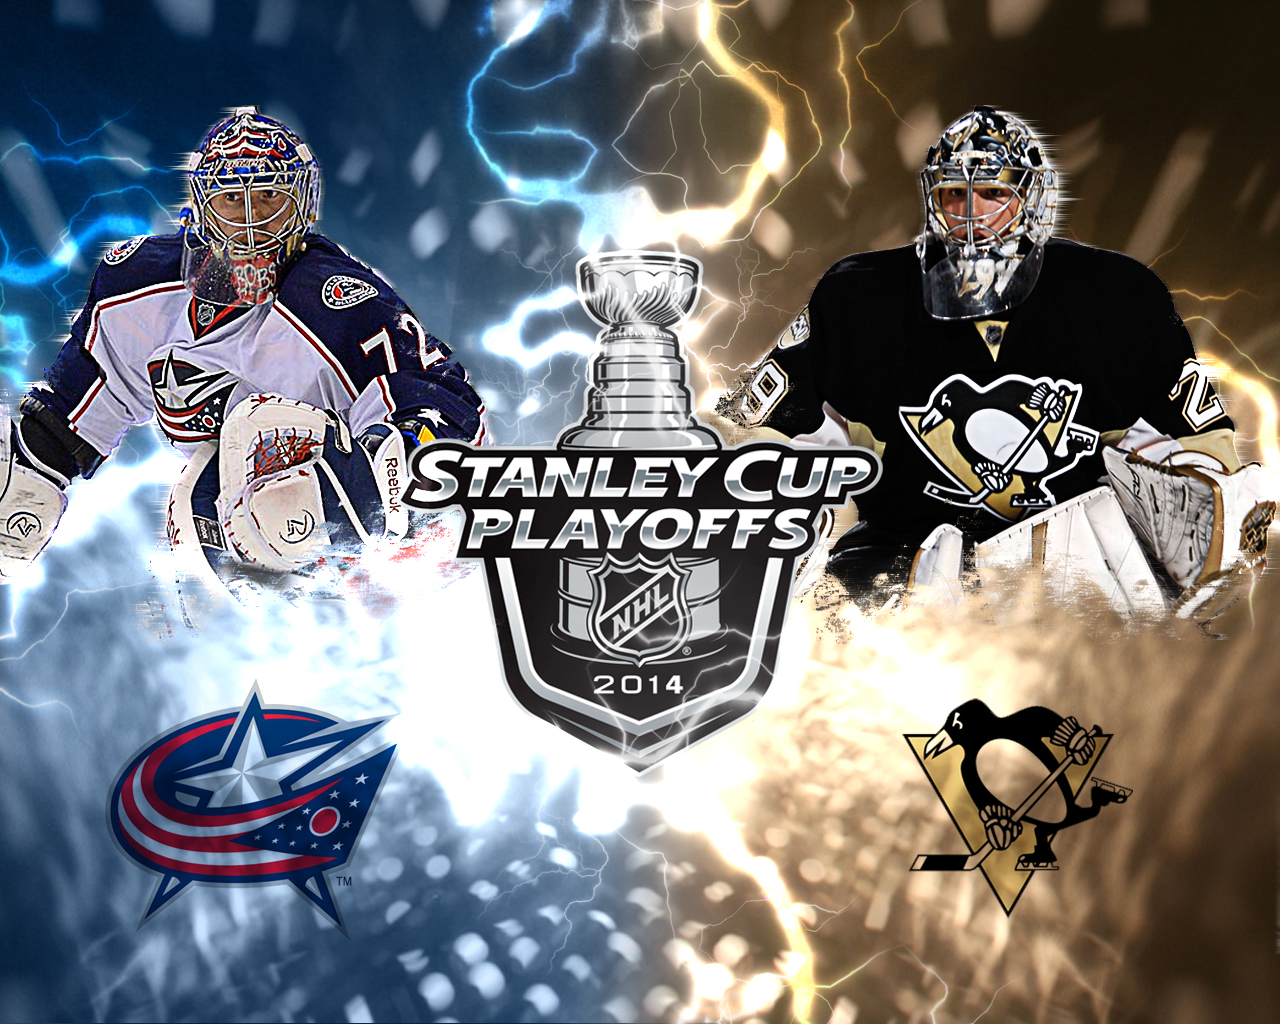 Fleury Sergei Bobrovsky Penguins Vs Blue Jackets Stanley Cup Playoffs